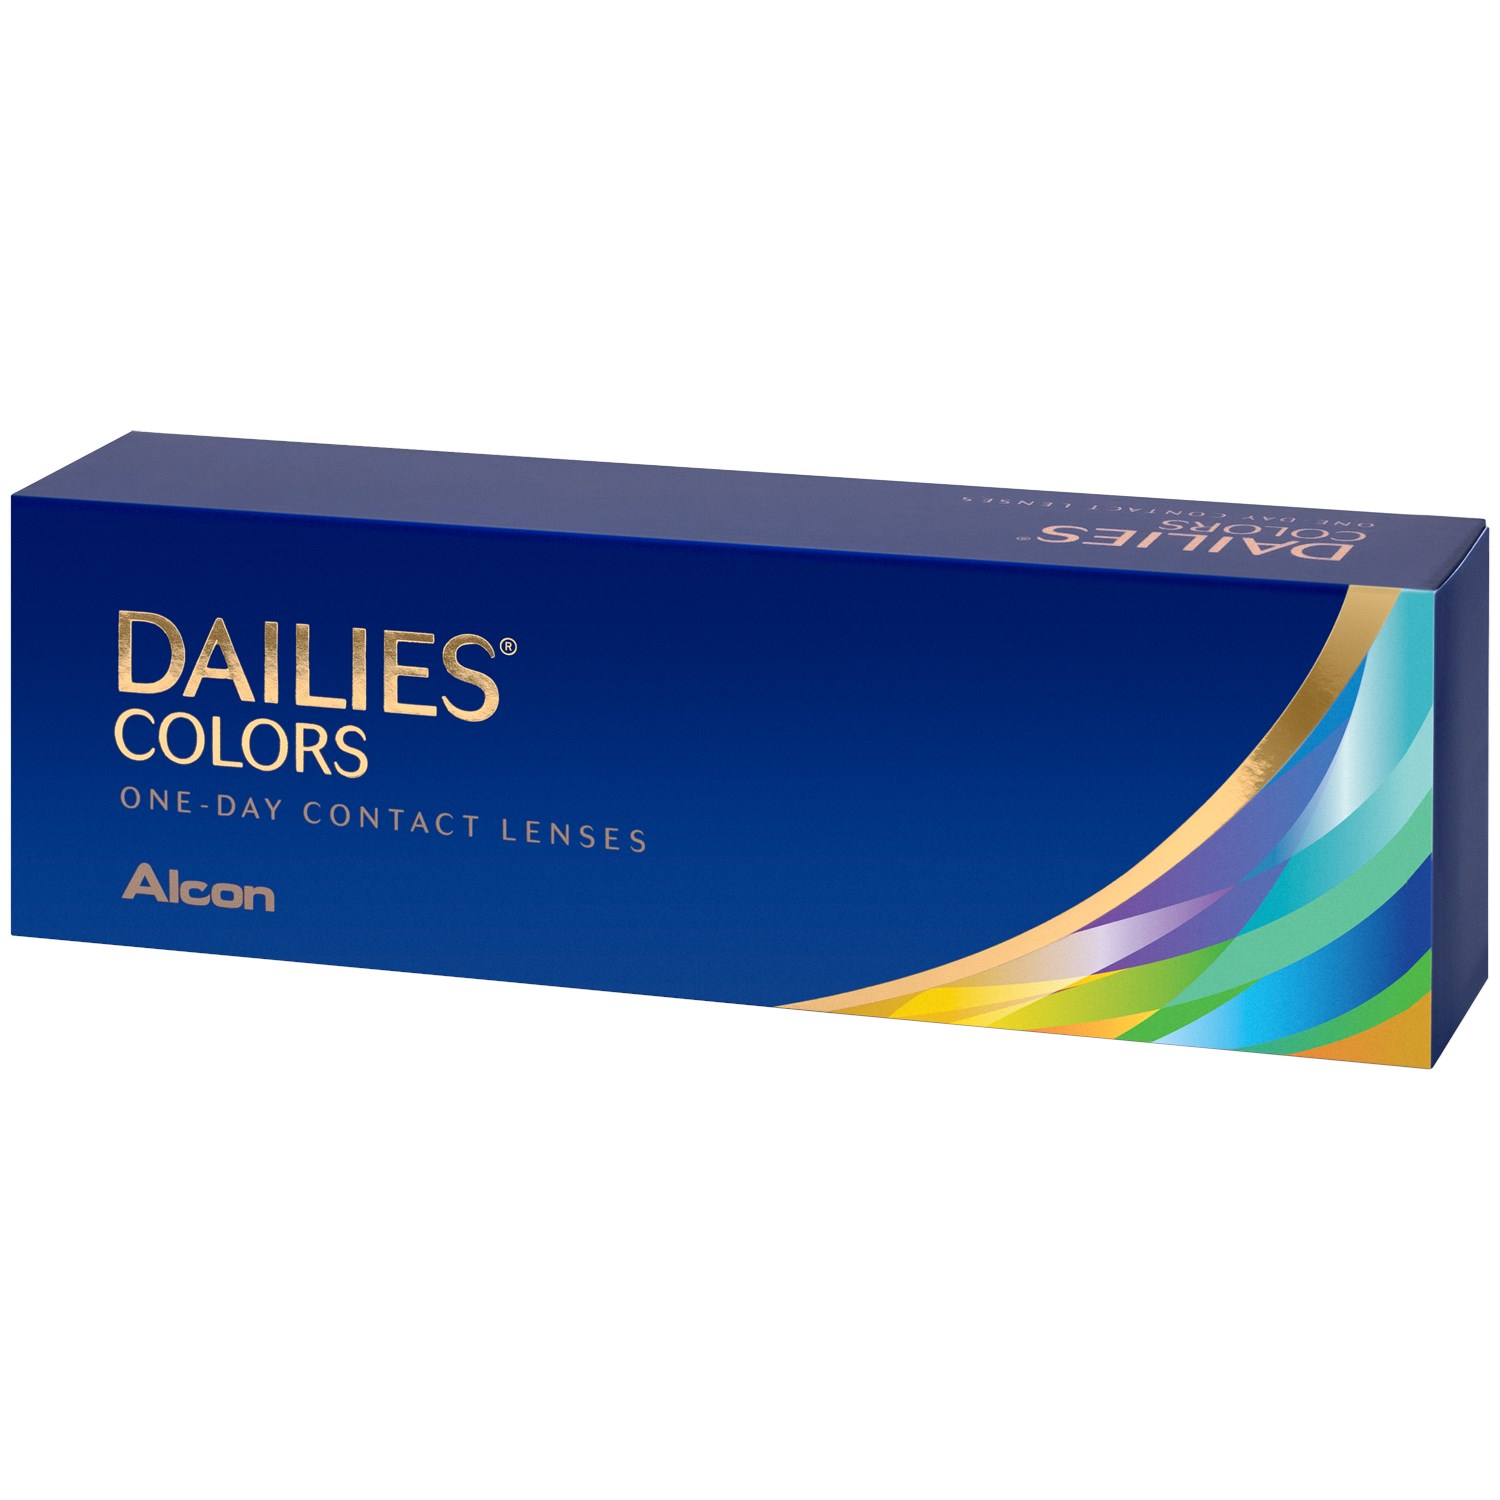 DAILIES COLORS 30pk contact lenses